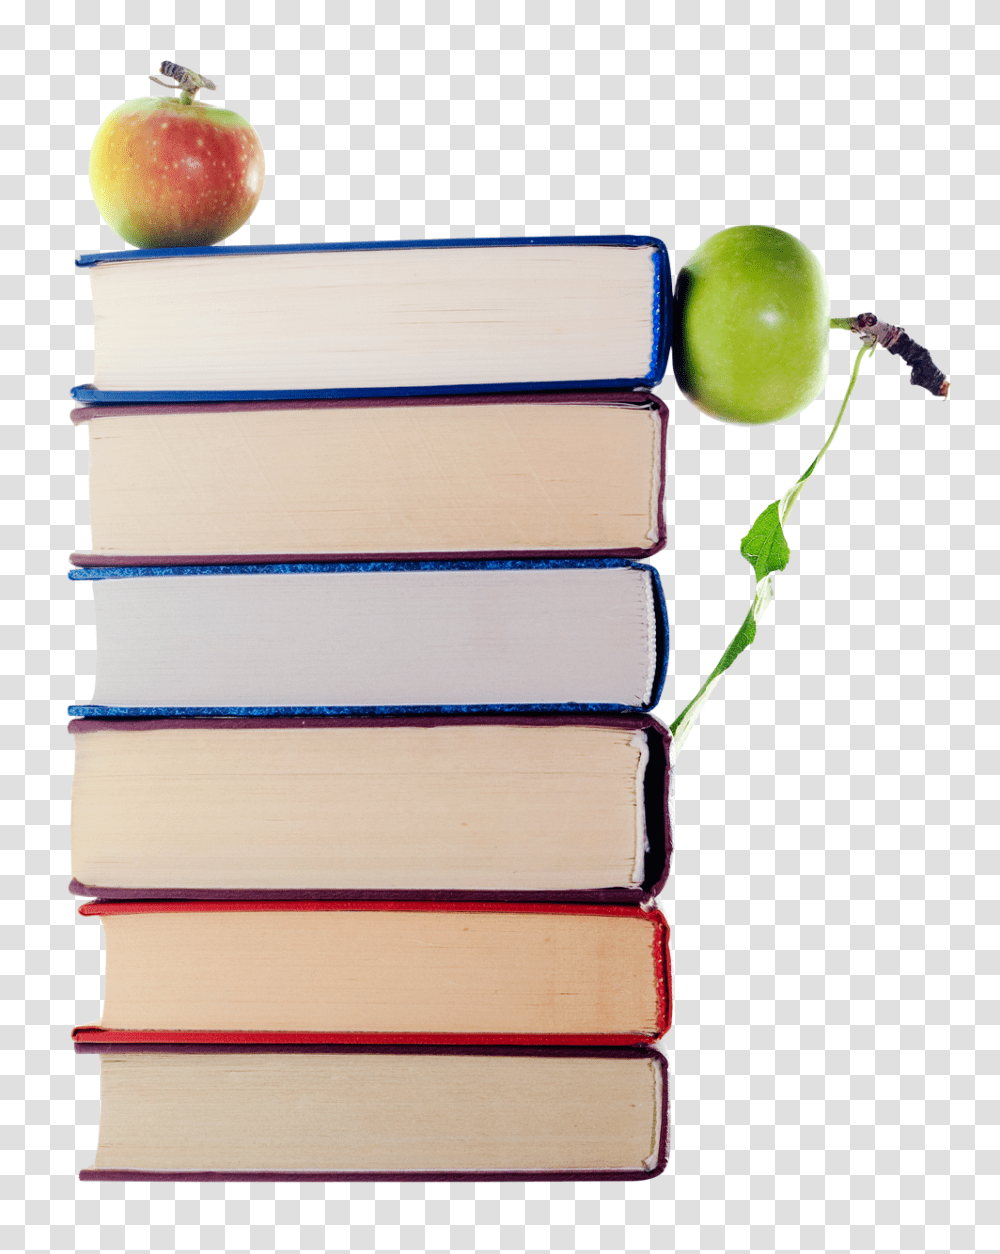 Stack Of Books And Apple Image, Fruit, Plant, Food, Novel Transparent Png